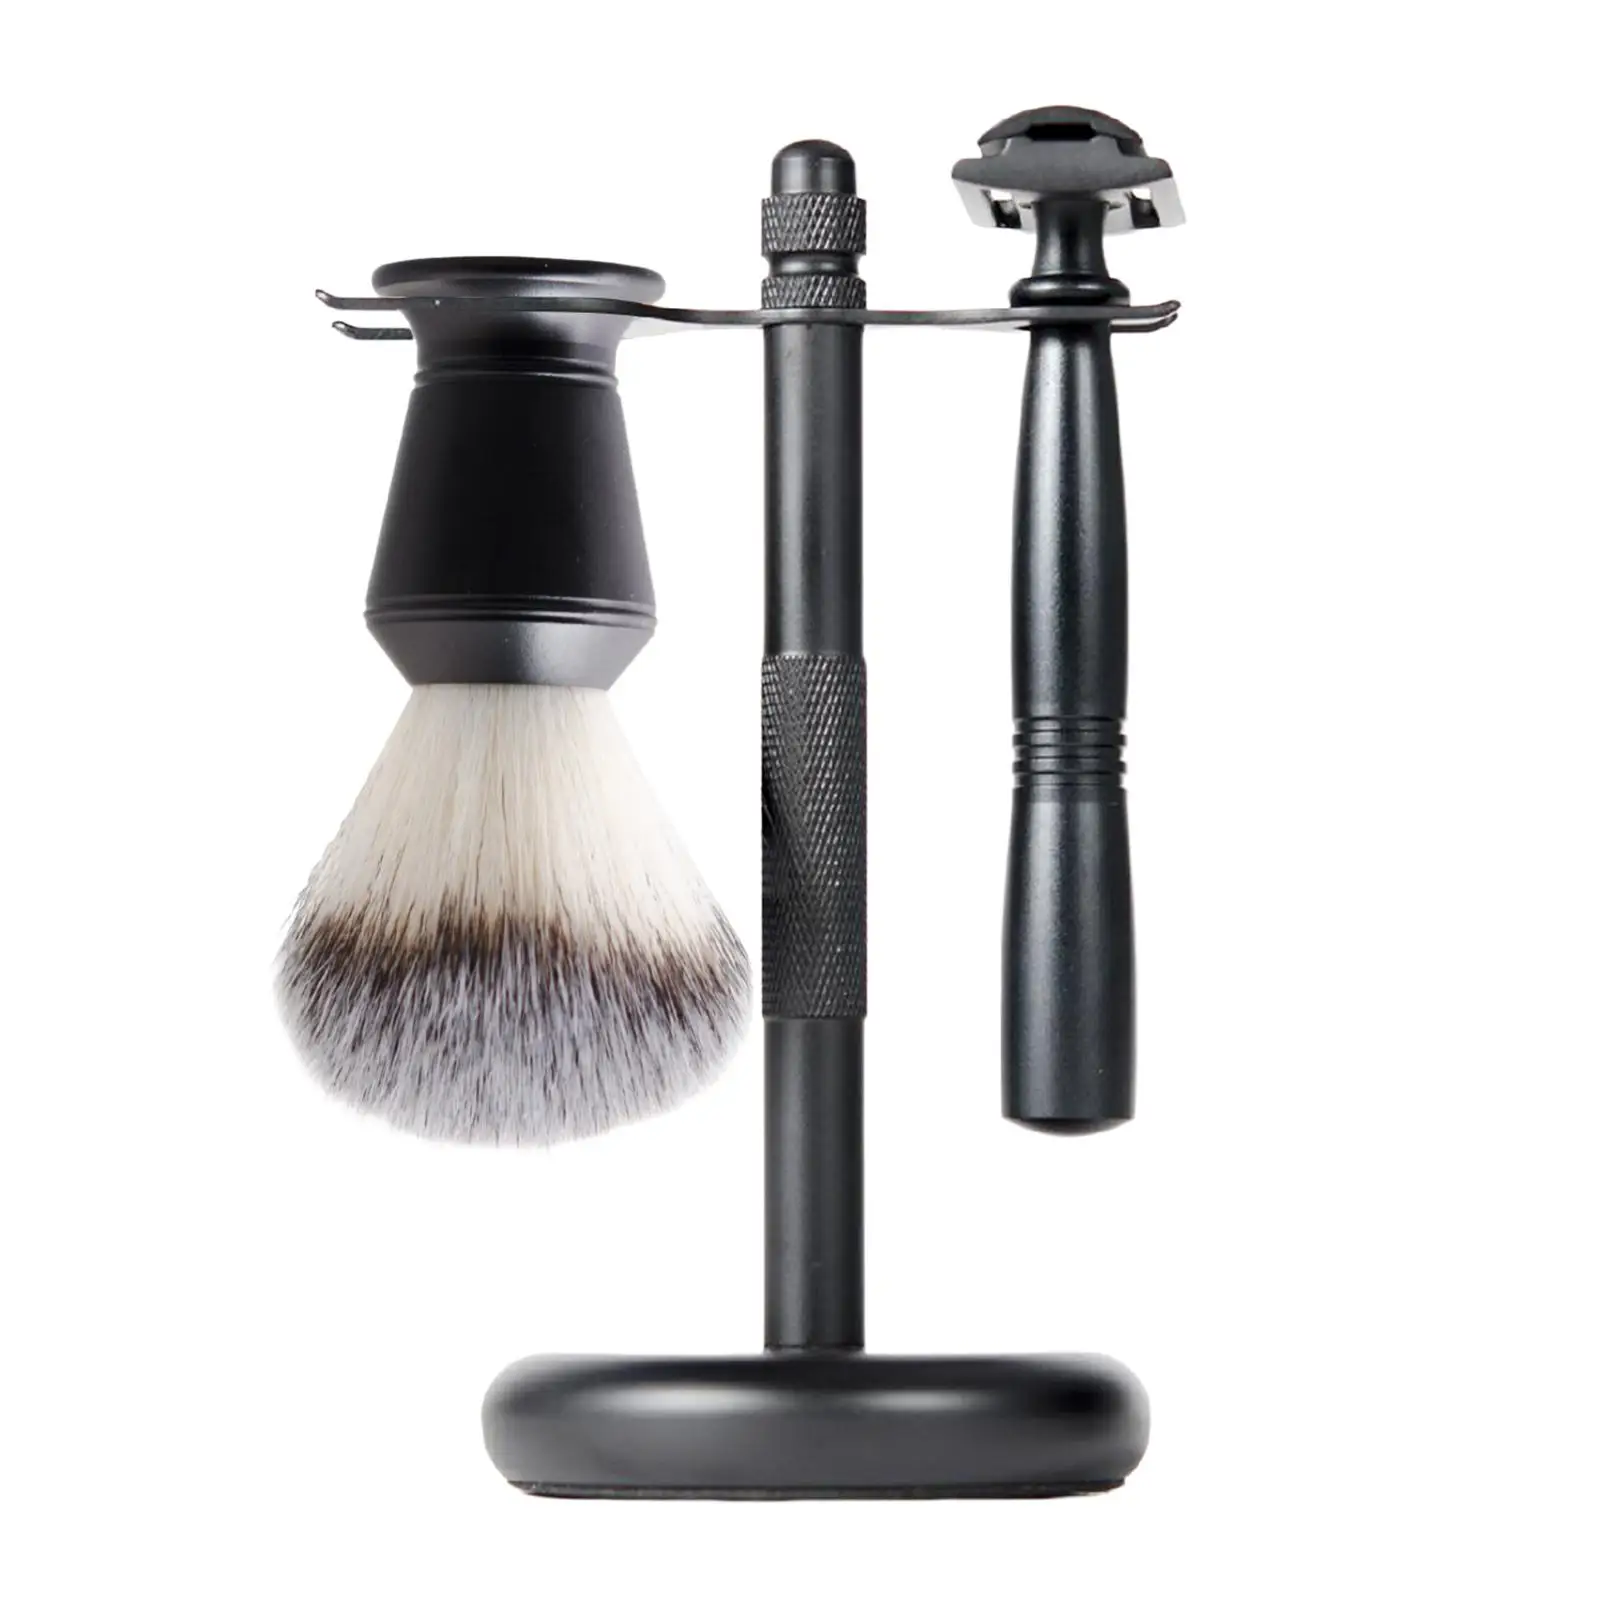 3x Shaving Set Black Color Double Edge Safety Razor Shaving Cleaning Tool Razor+ Stand Holder + Shaving Brush Luxury Gift Set